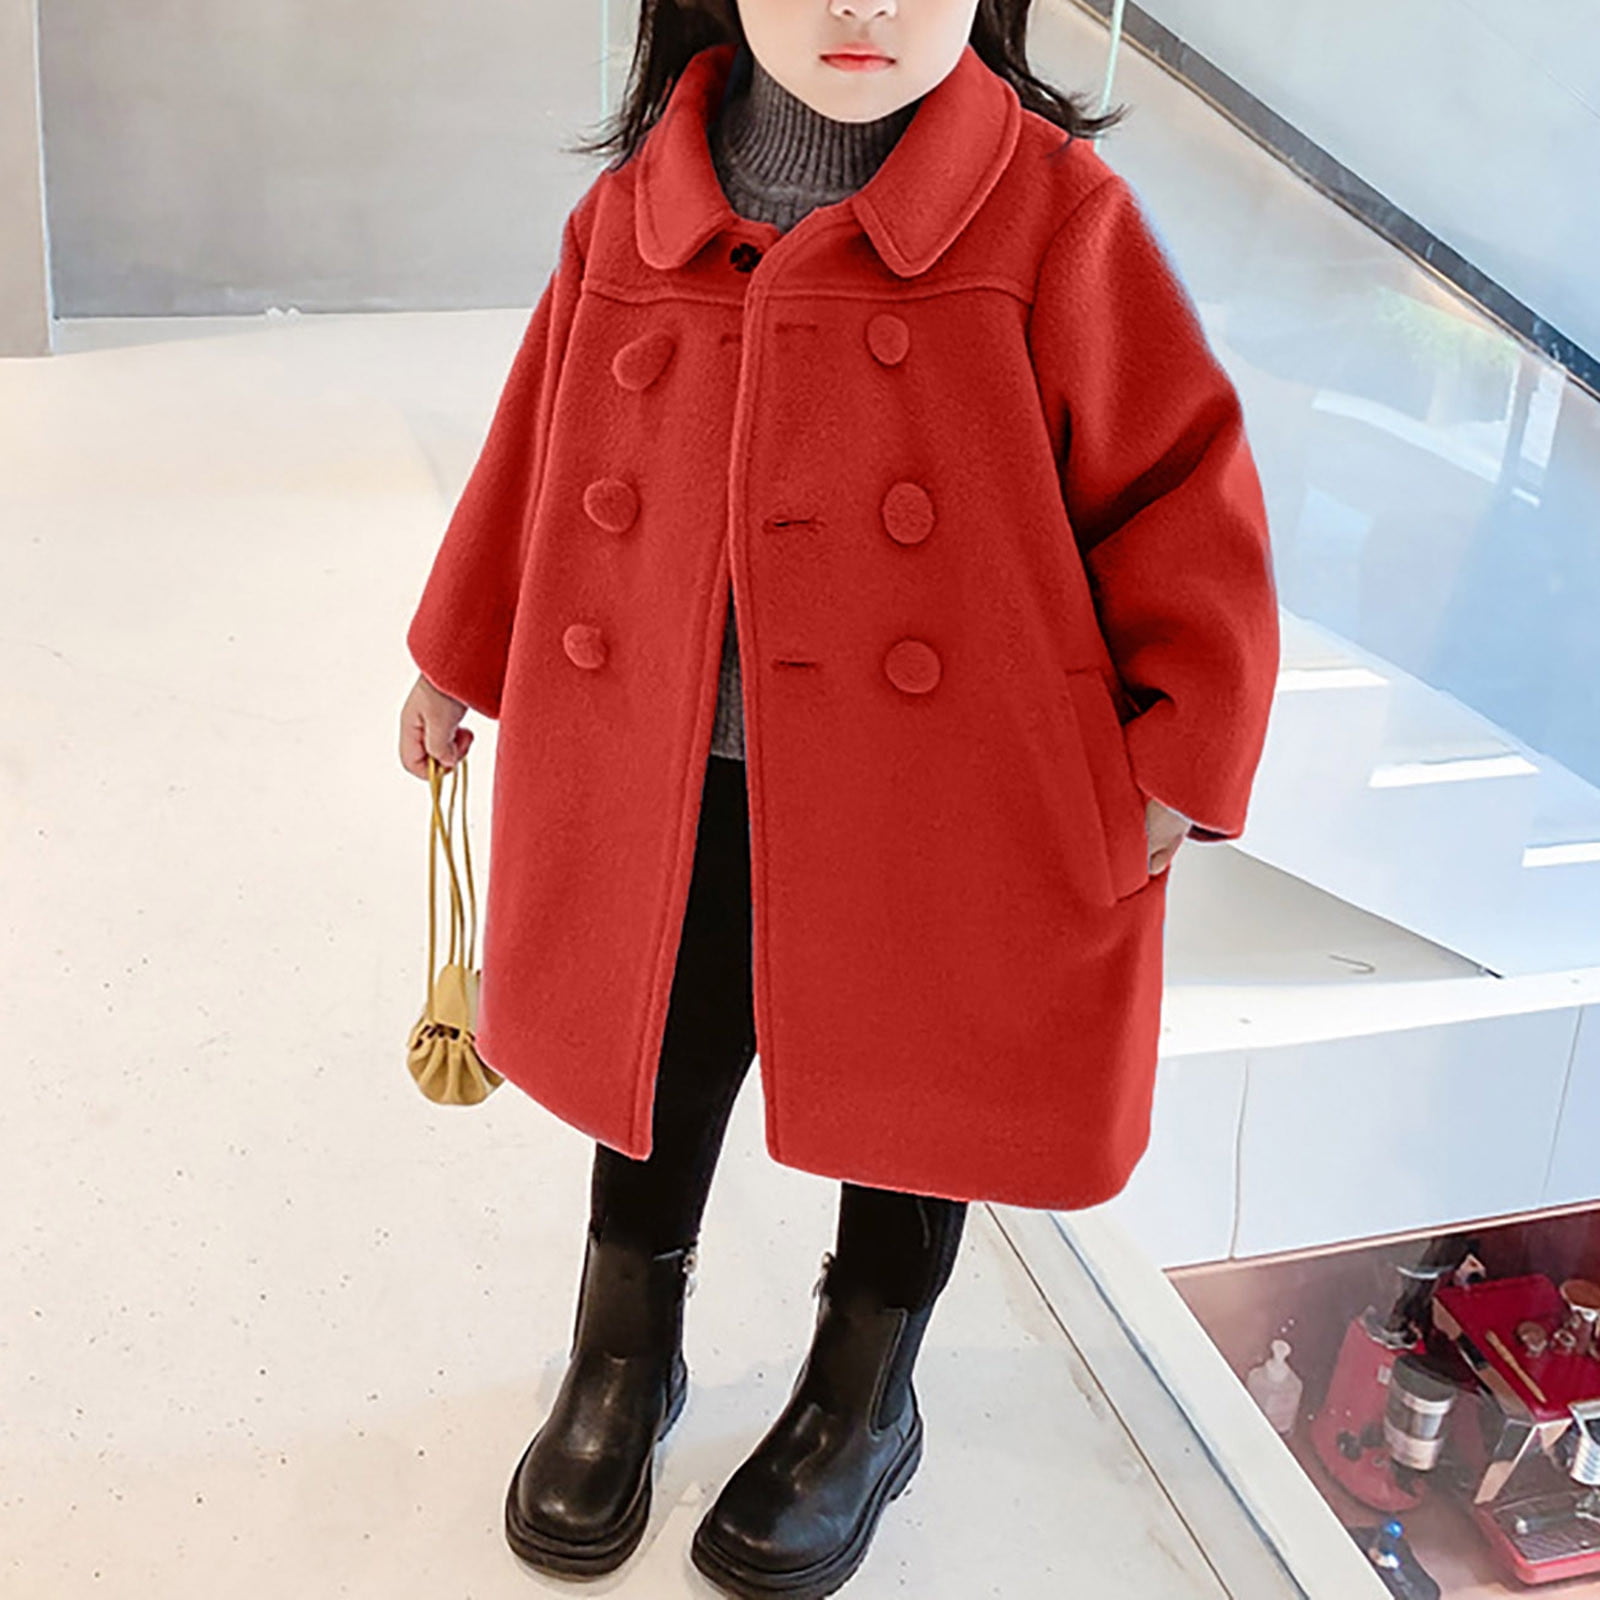 Rrhss Girls Winter Dress Coat Kids Fashion Button Down Lapel Jacket Outerwear with Pockets 5-14 Years